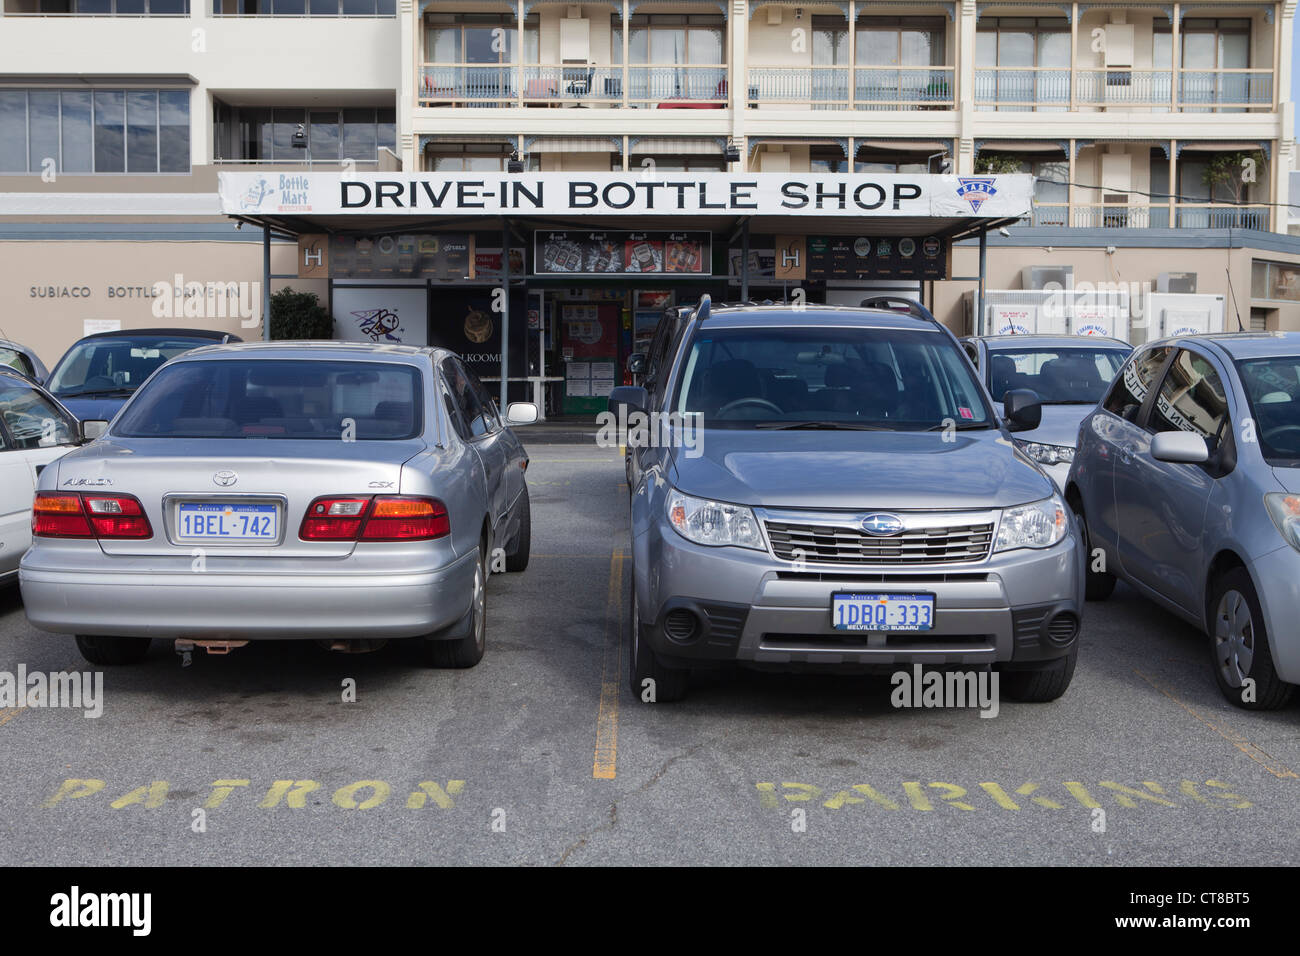 Ein Drive-in-Bottle-Shop in Perth, Western Australia. Stockfoto